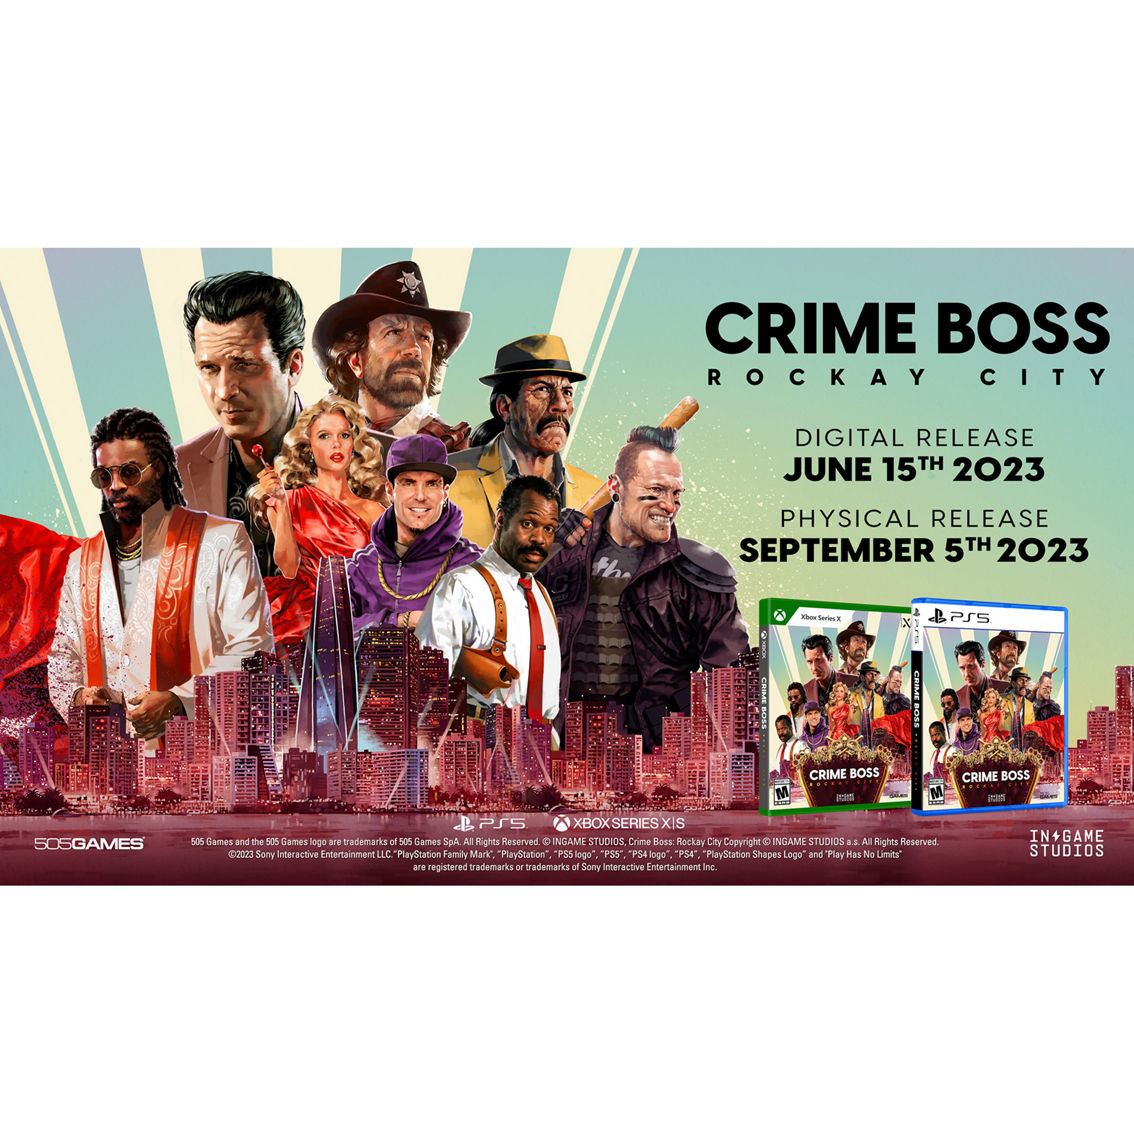 Crime Boss: Rockay City (PS5) - Image 2 of 2